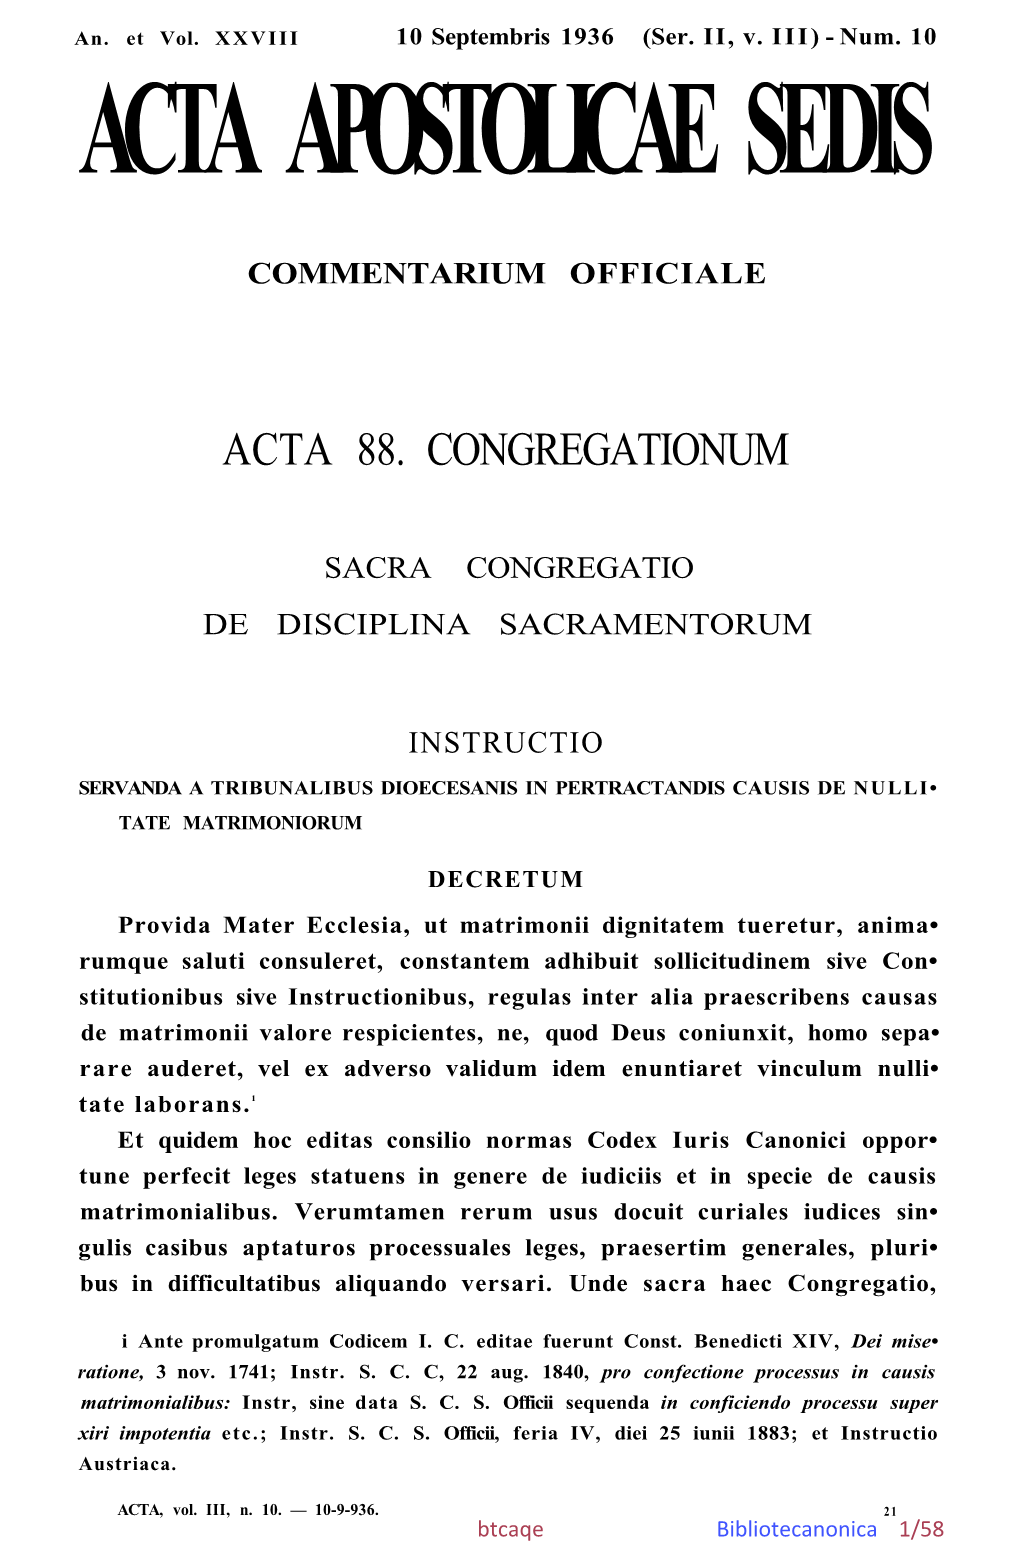 Btcaqe Instructio Provida Mater, 15 Agosto 1936, AAS 28